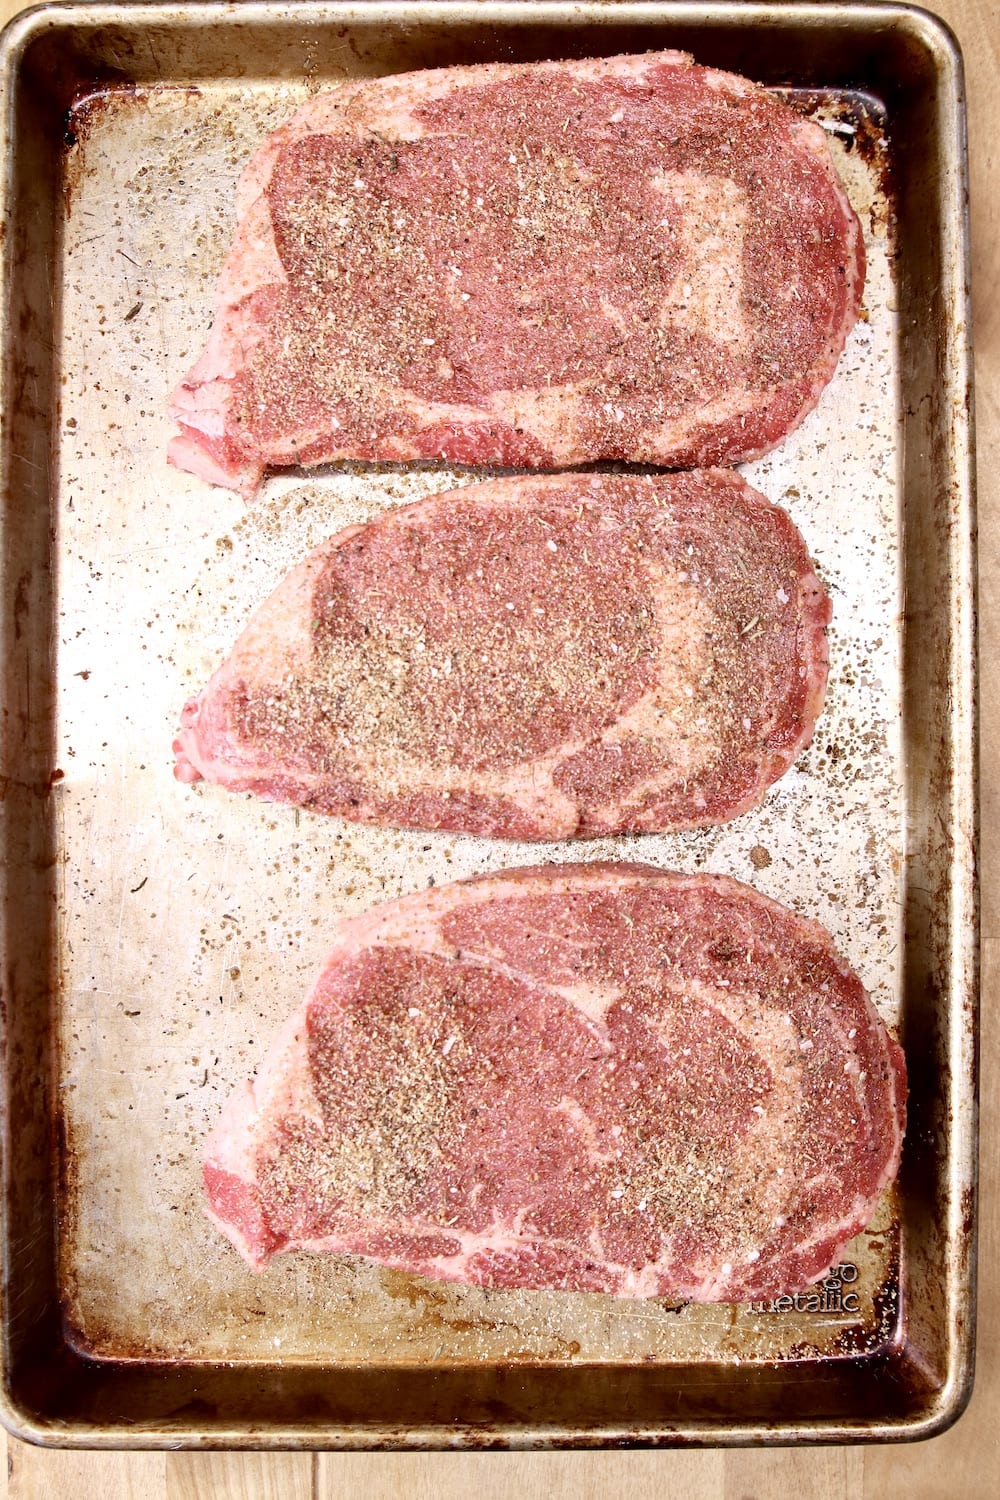 Dry rubbed ribeye steaks on a sheet pan